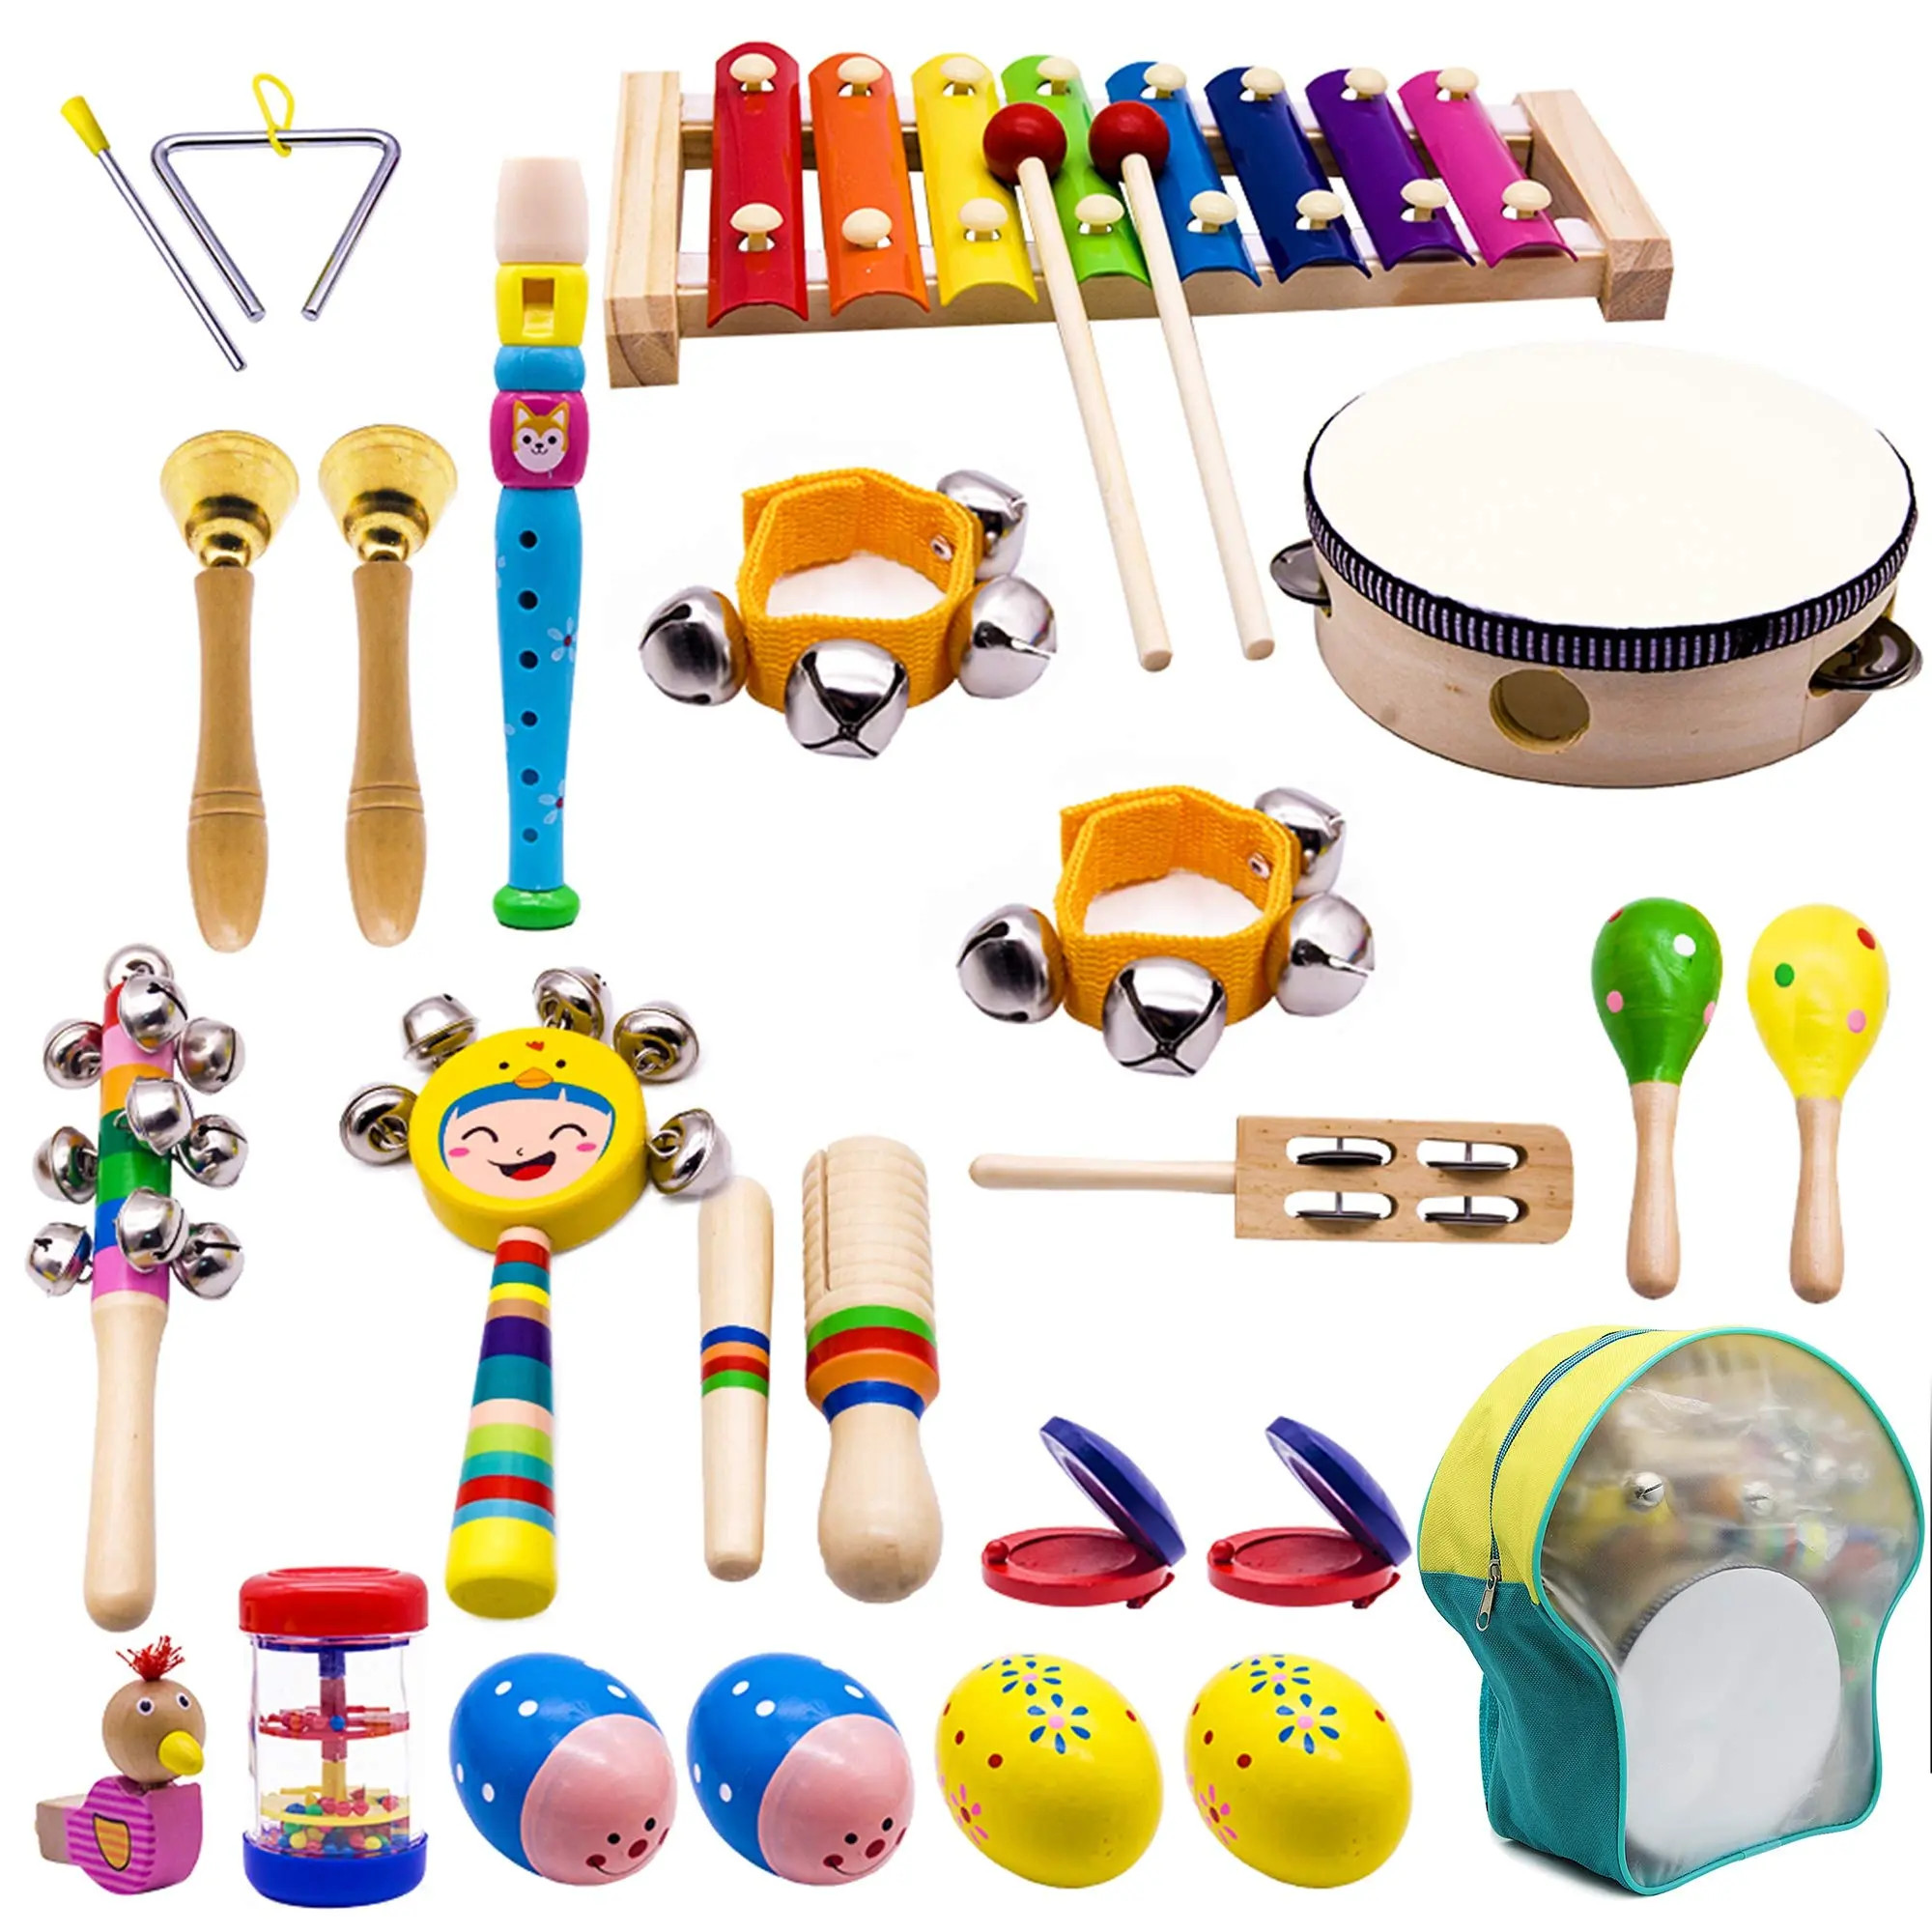 33PCS Kids Musical Instruments Wooden Instruments Tambourine Xylophone Toys for Kids Children Preschool Educational